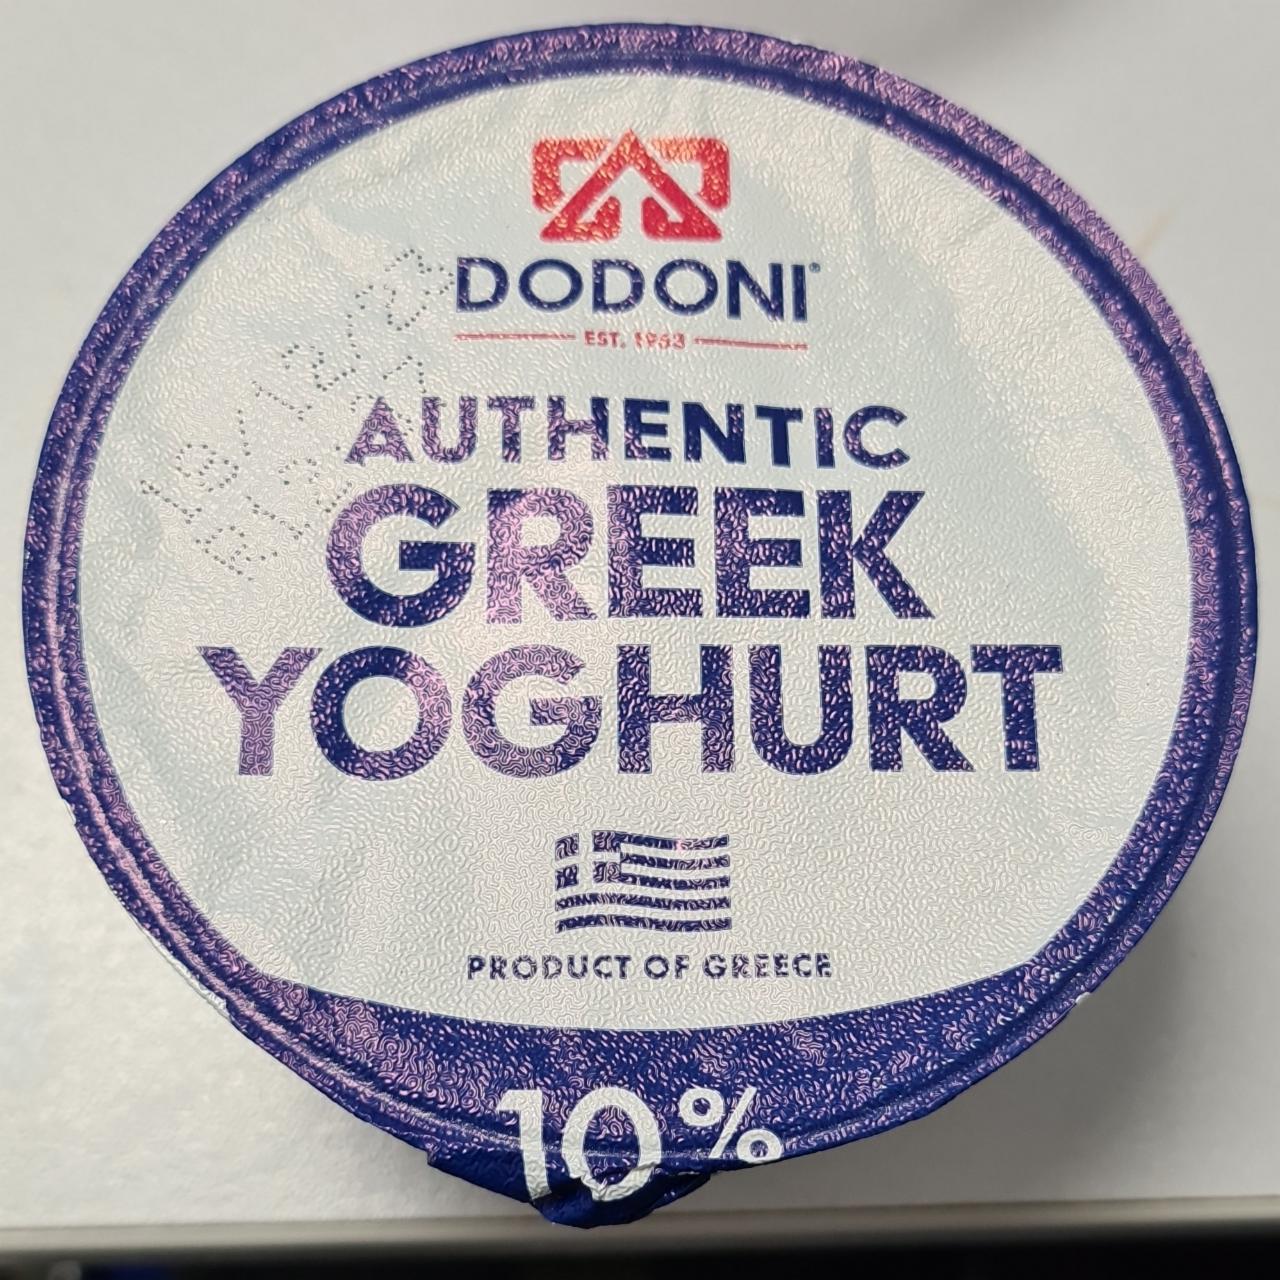 Fotografie - Authentic Greek Yoghurt Dodoni